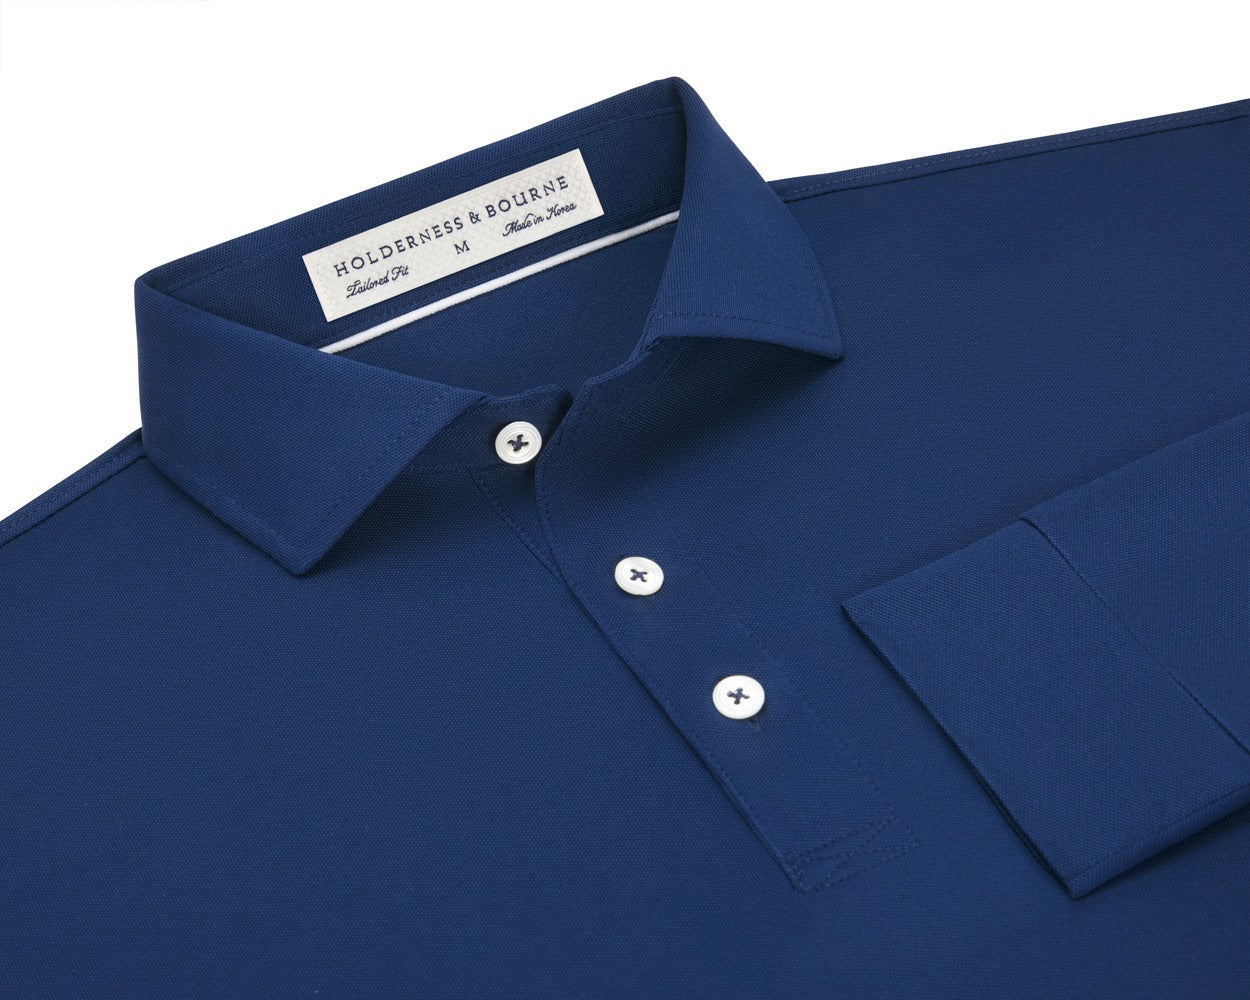 Folded Holderness and Bourne navy blue long sleeve shirt.